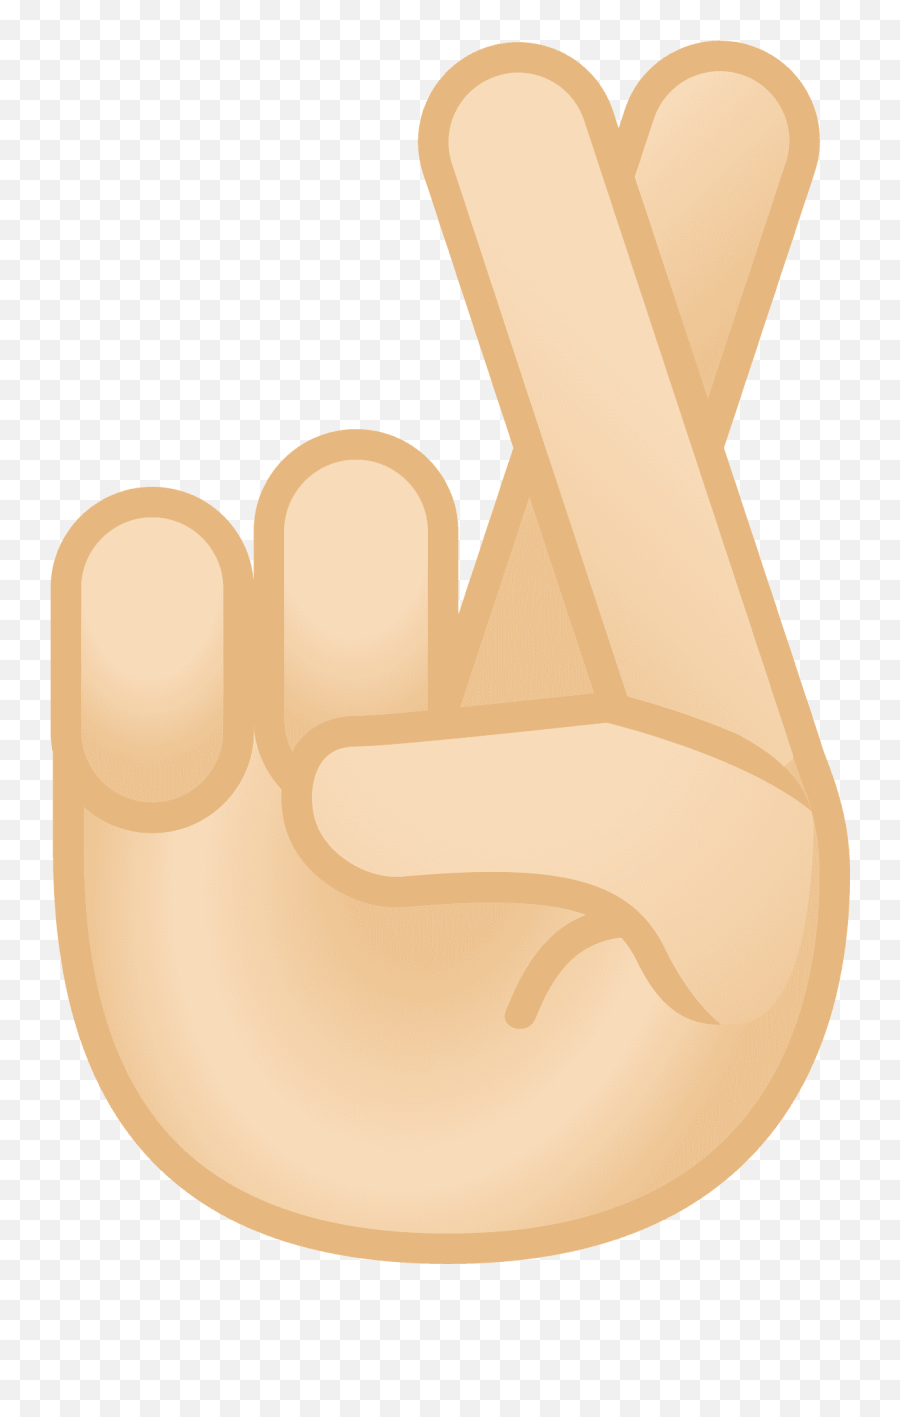 Crossed Fingers Emoji With Light - Transparent Background Crossed Fingers Emoji Png,Crossing Fingers Emoji